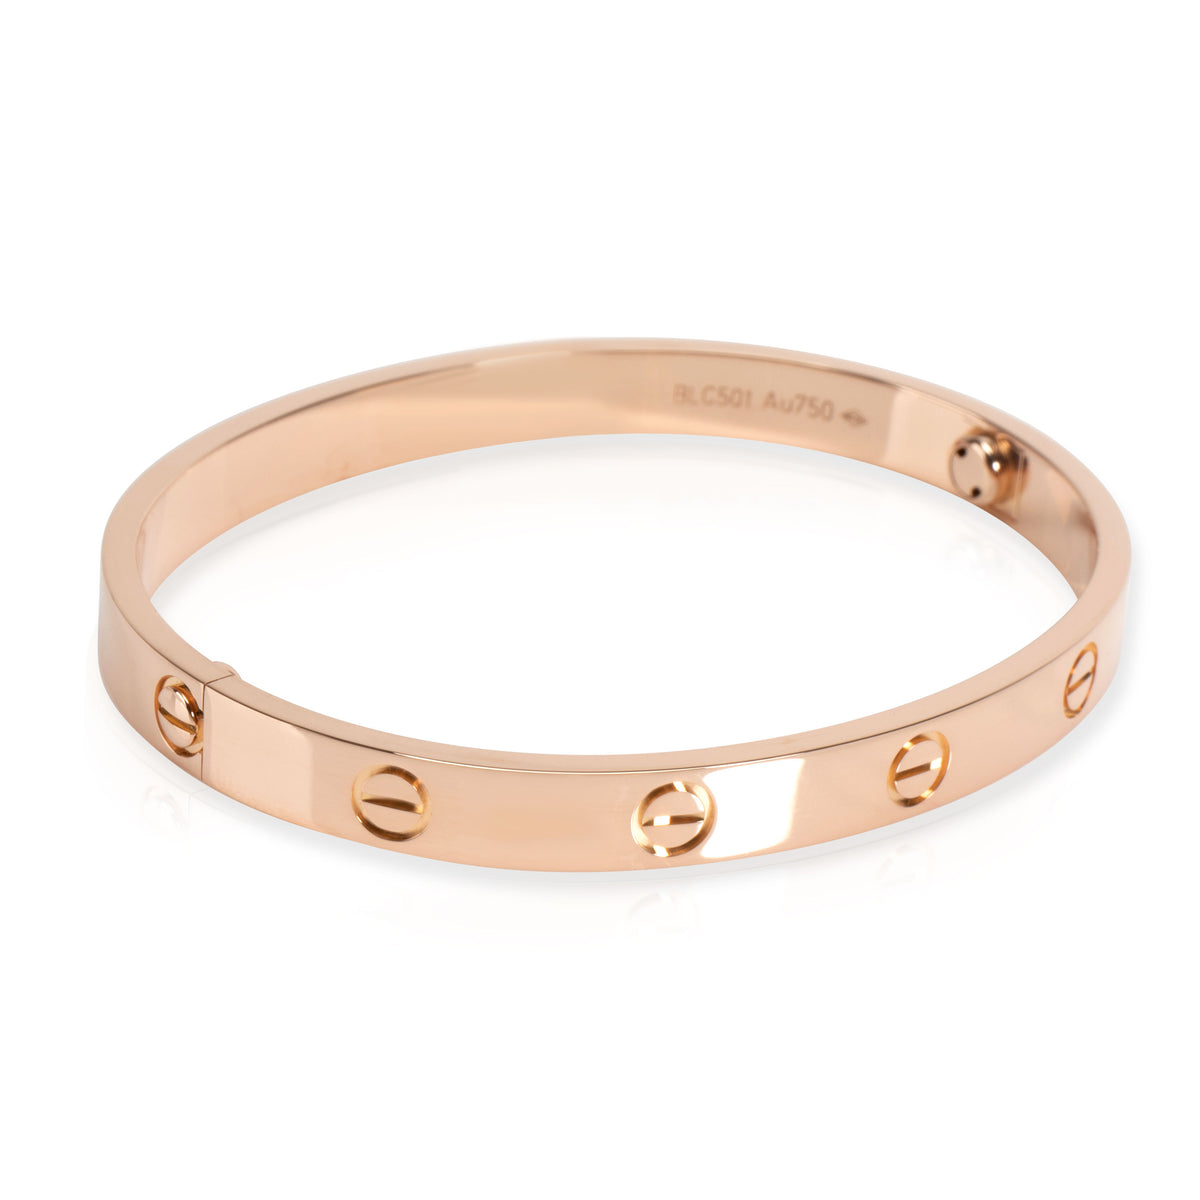 Cartier Love Bracelet in 18K Rose Gold Size 17